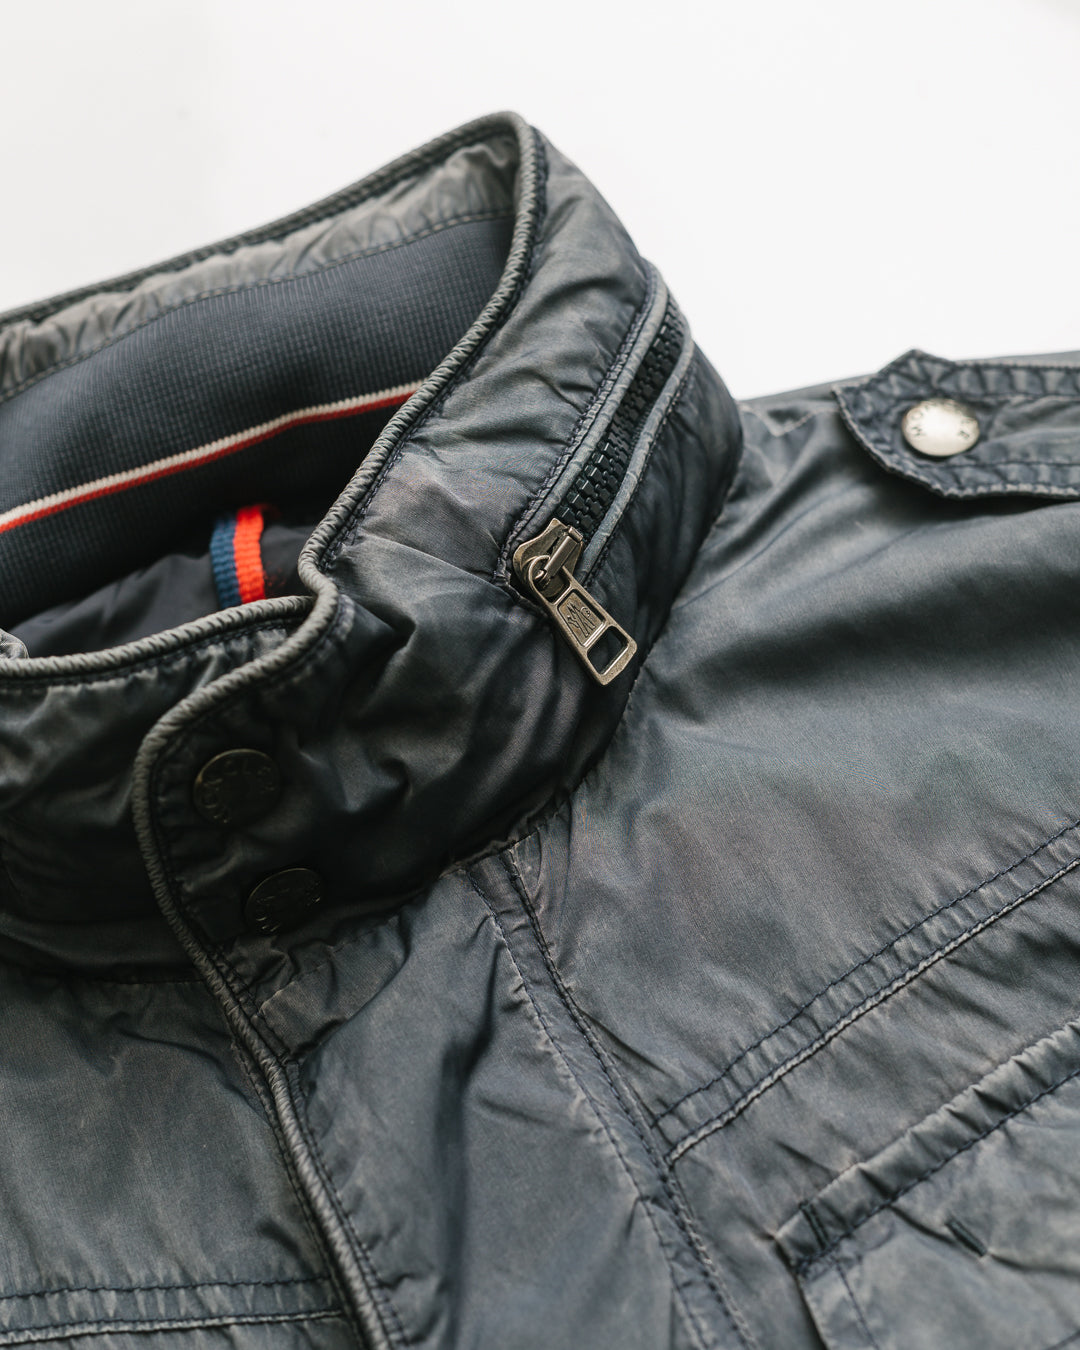 Moncler ’Garment Washed’ Detachable Hooded Jacket